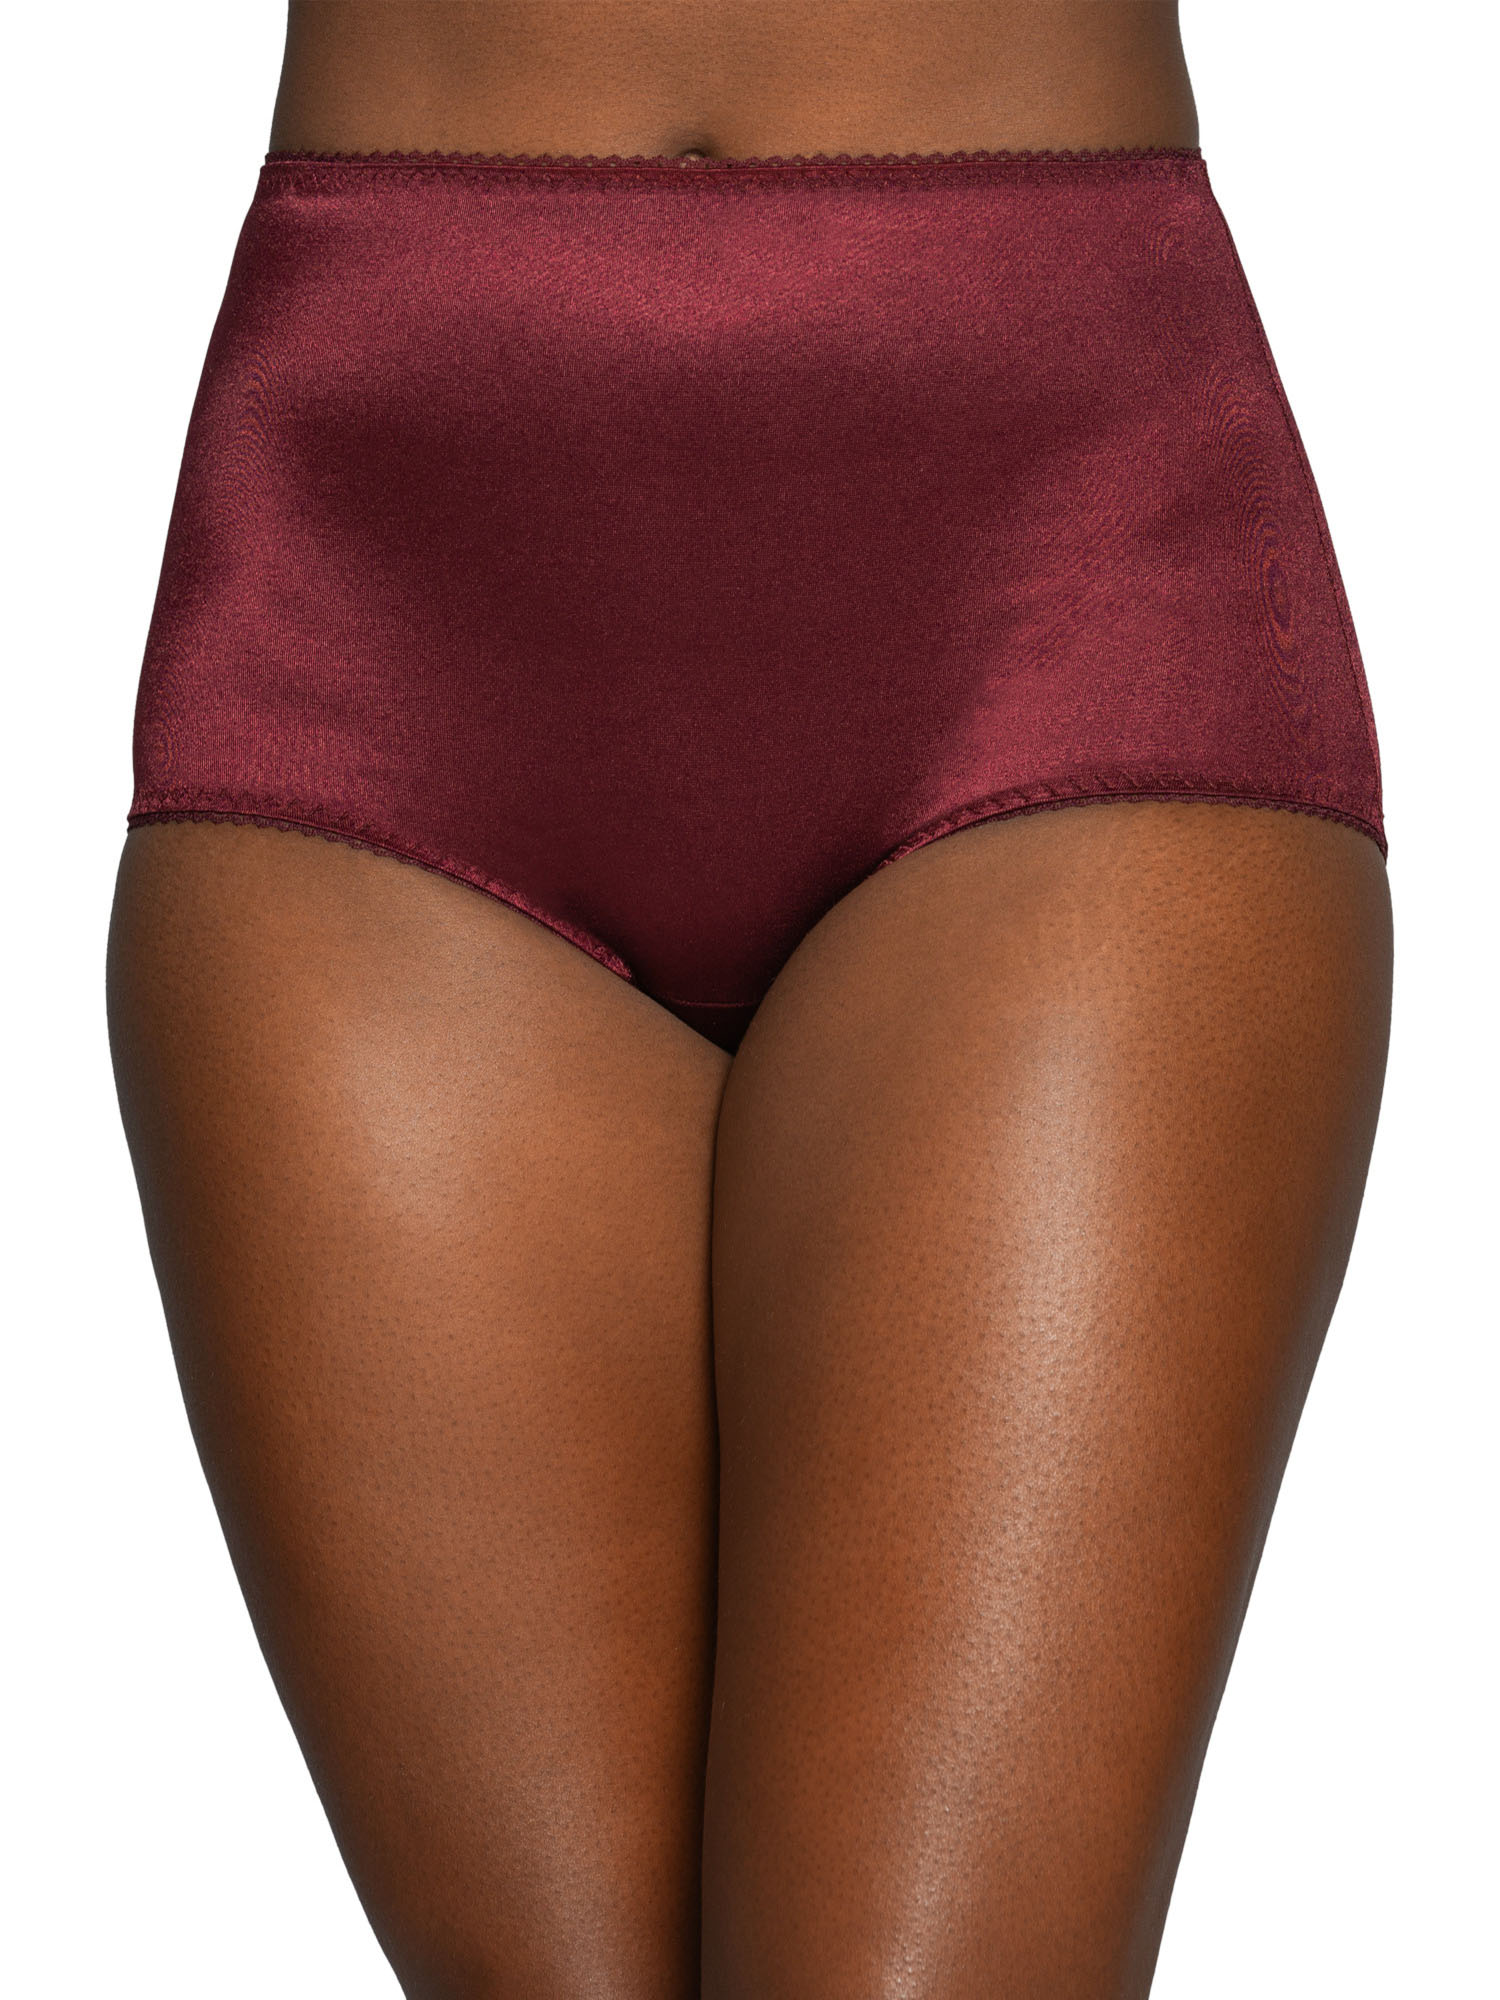 Vanity Fair Radiant Collection Women's Undershapers Brief Underwear, 3 Pack - image 3 of 12